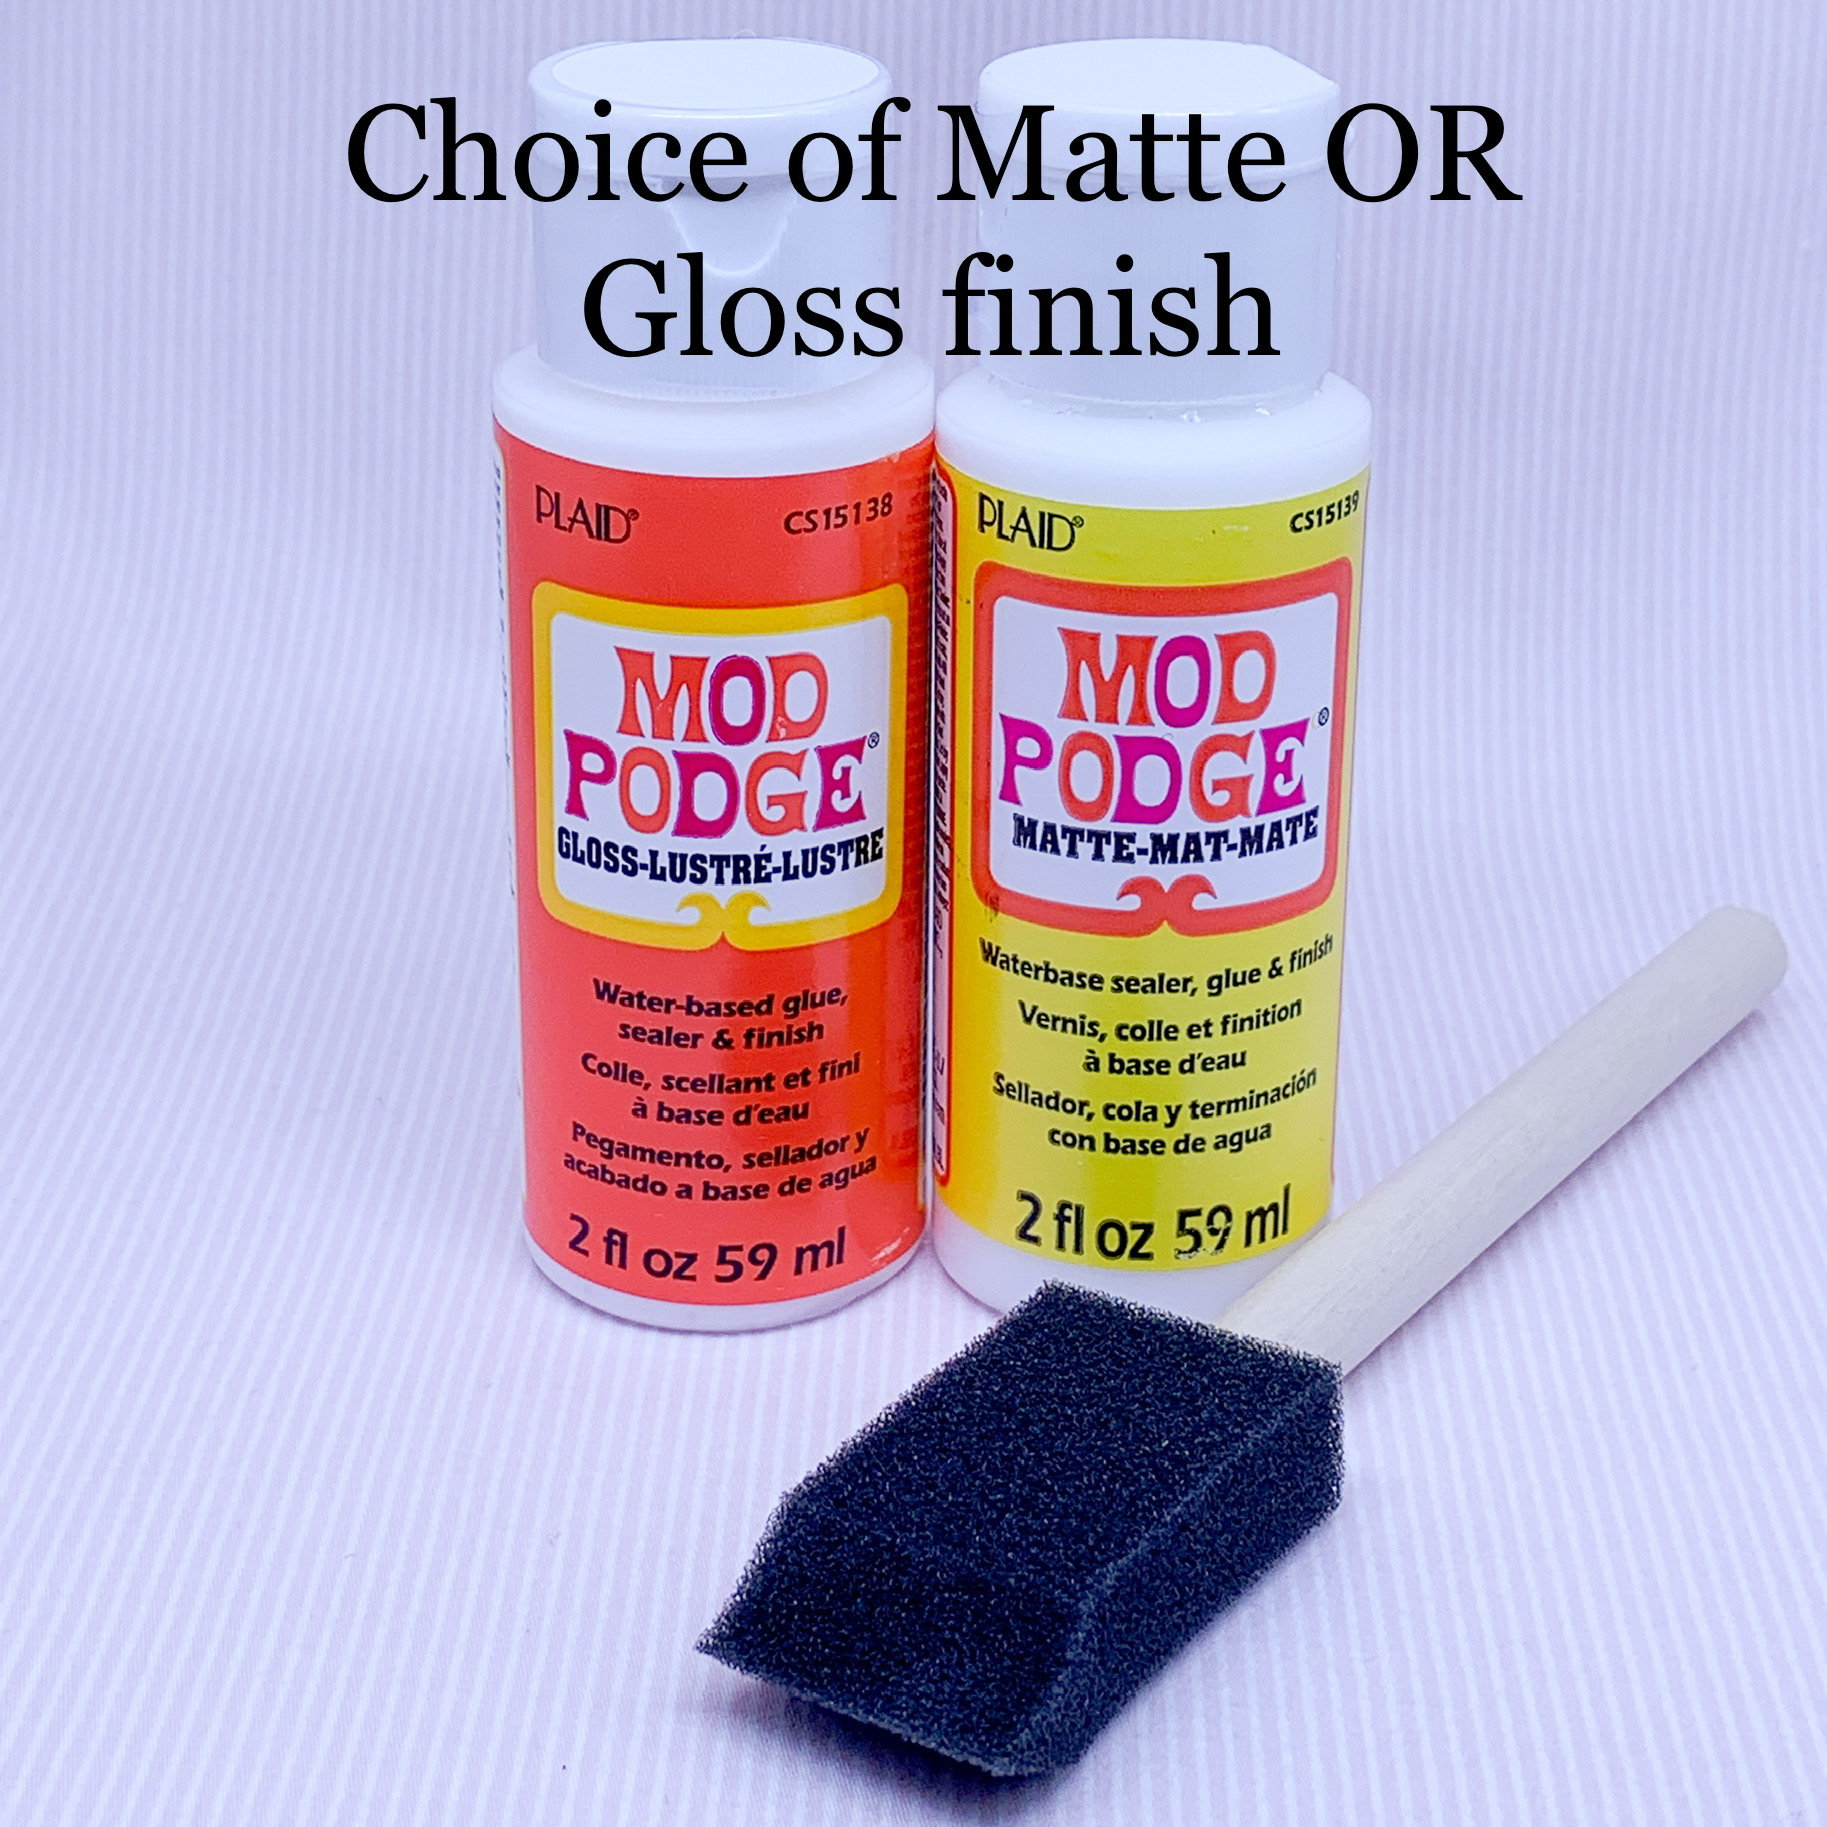  Mod Podge Clear Acrylic Sealer (12-Ounce), 1469 Matte